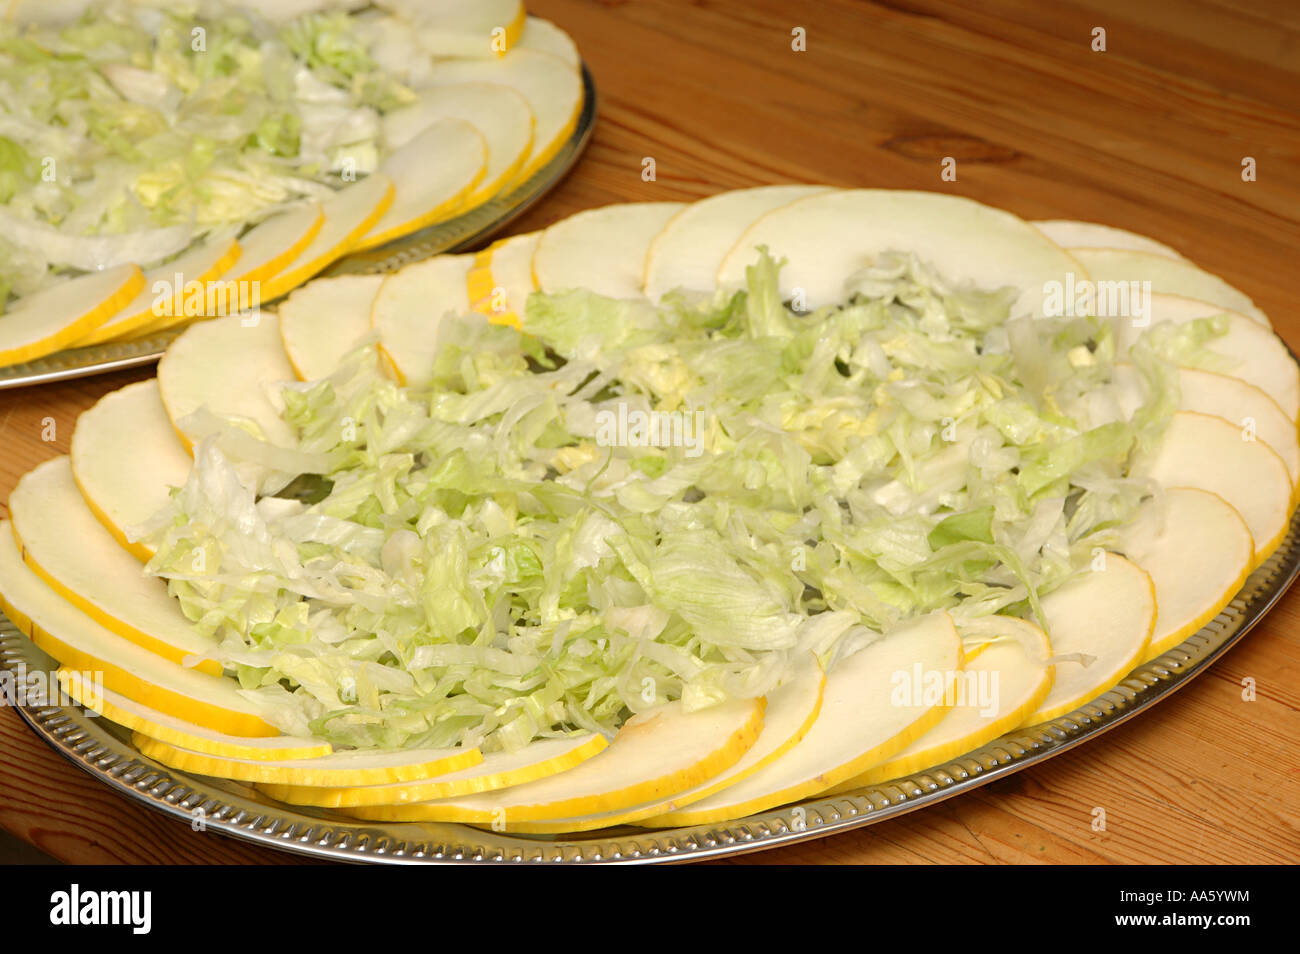 Chopped Ice berg salad and slice honey melon on the platter Stock Photo